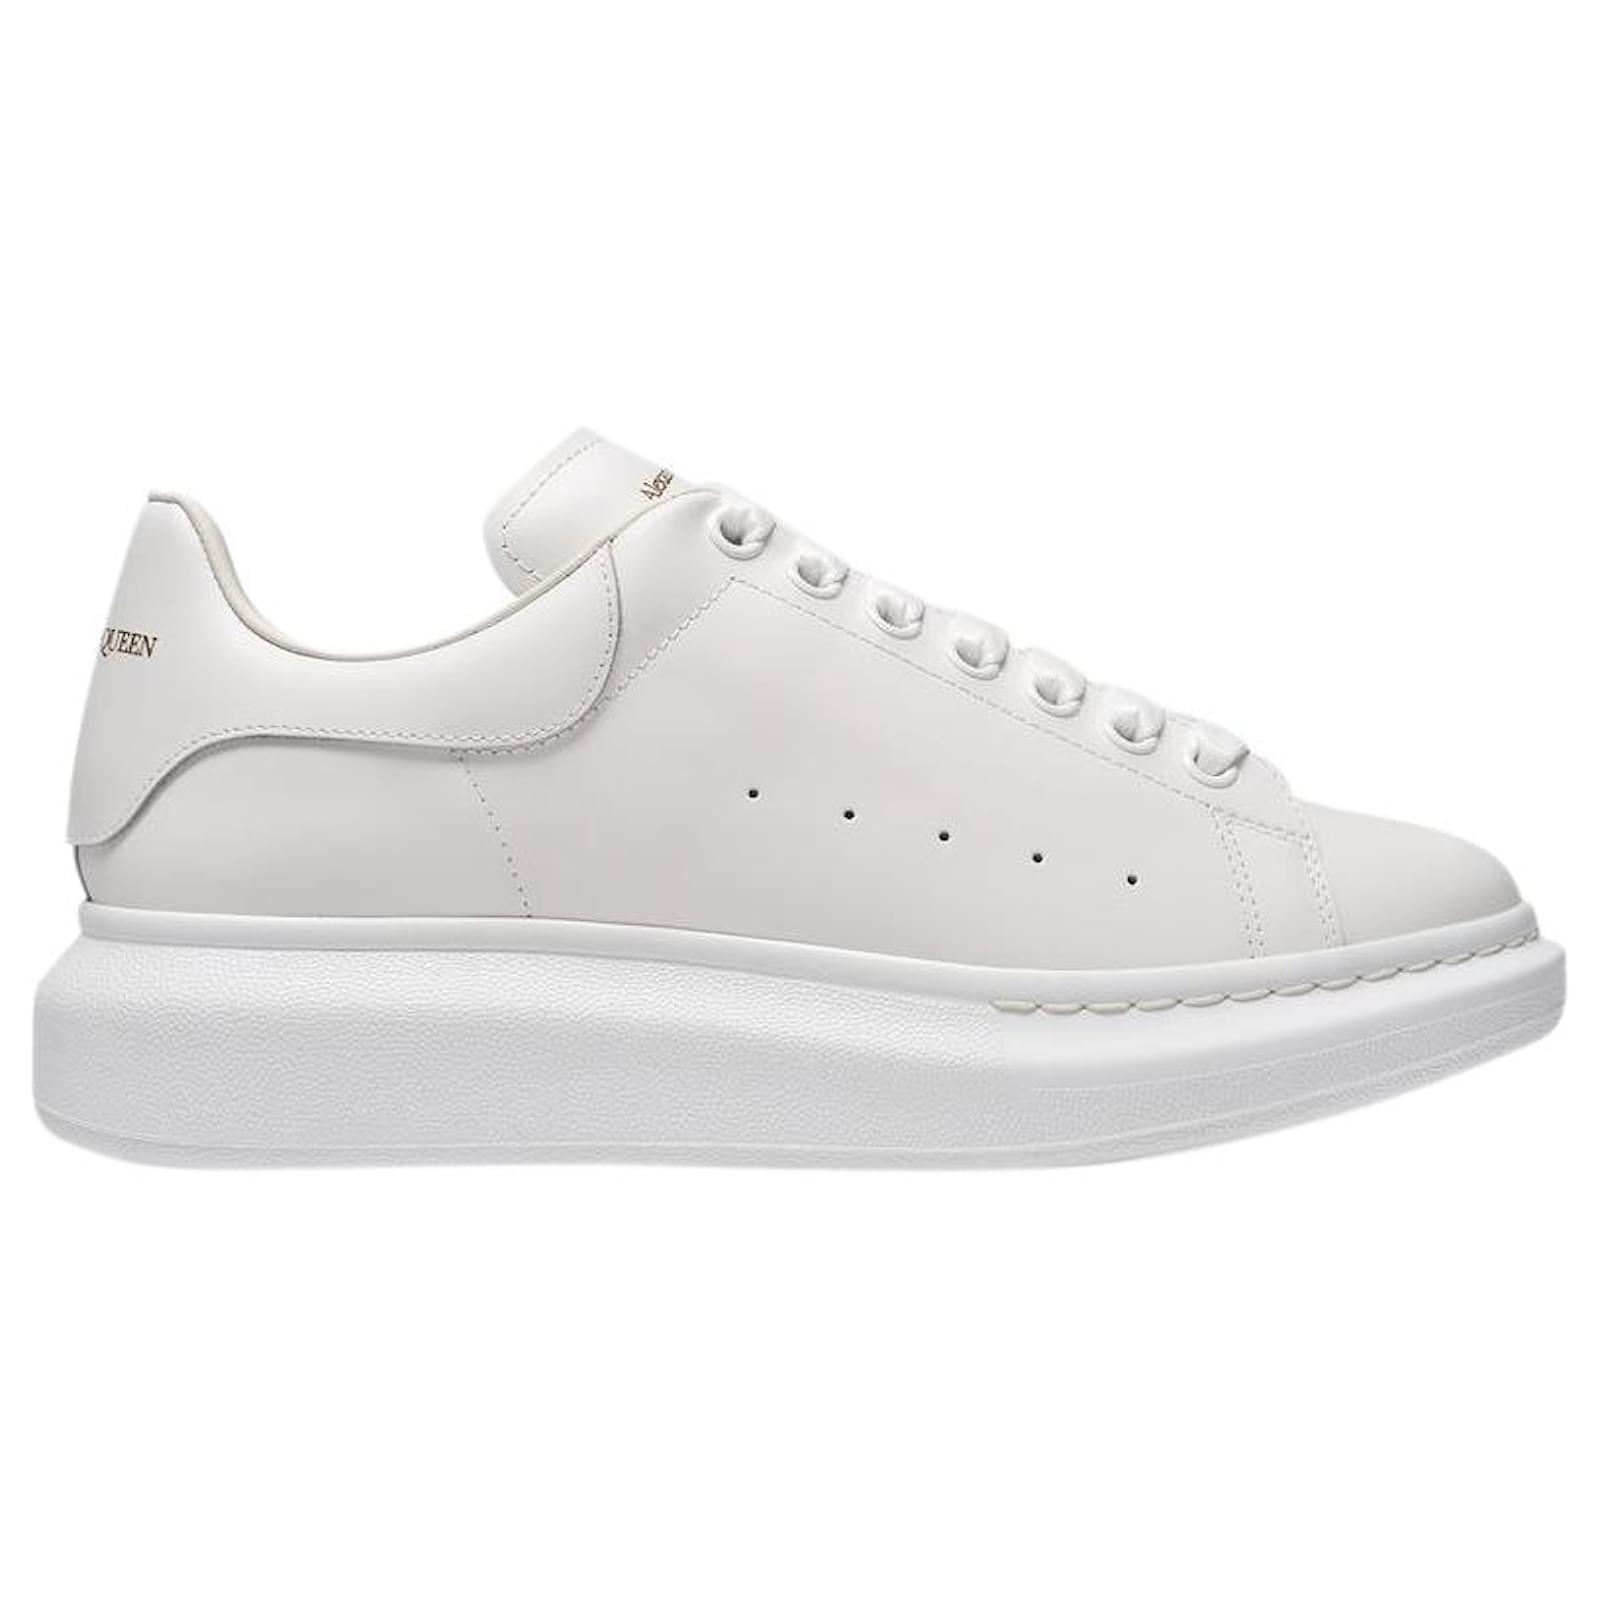 Alexander Mcqueen Sneakers Oversized en Cuir Blanc White Leather ref ...